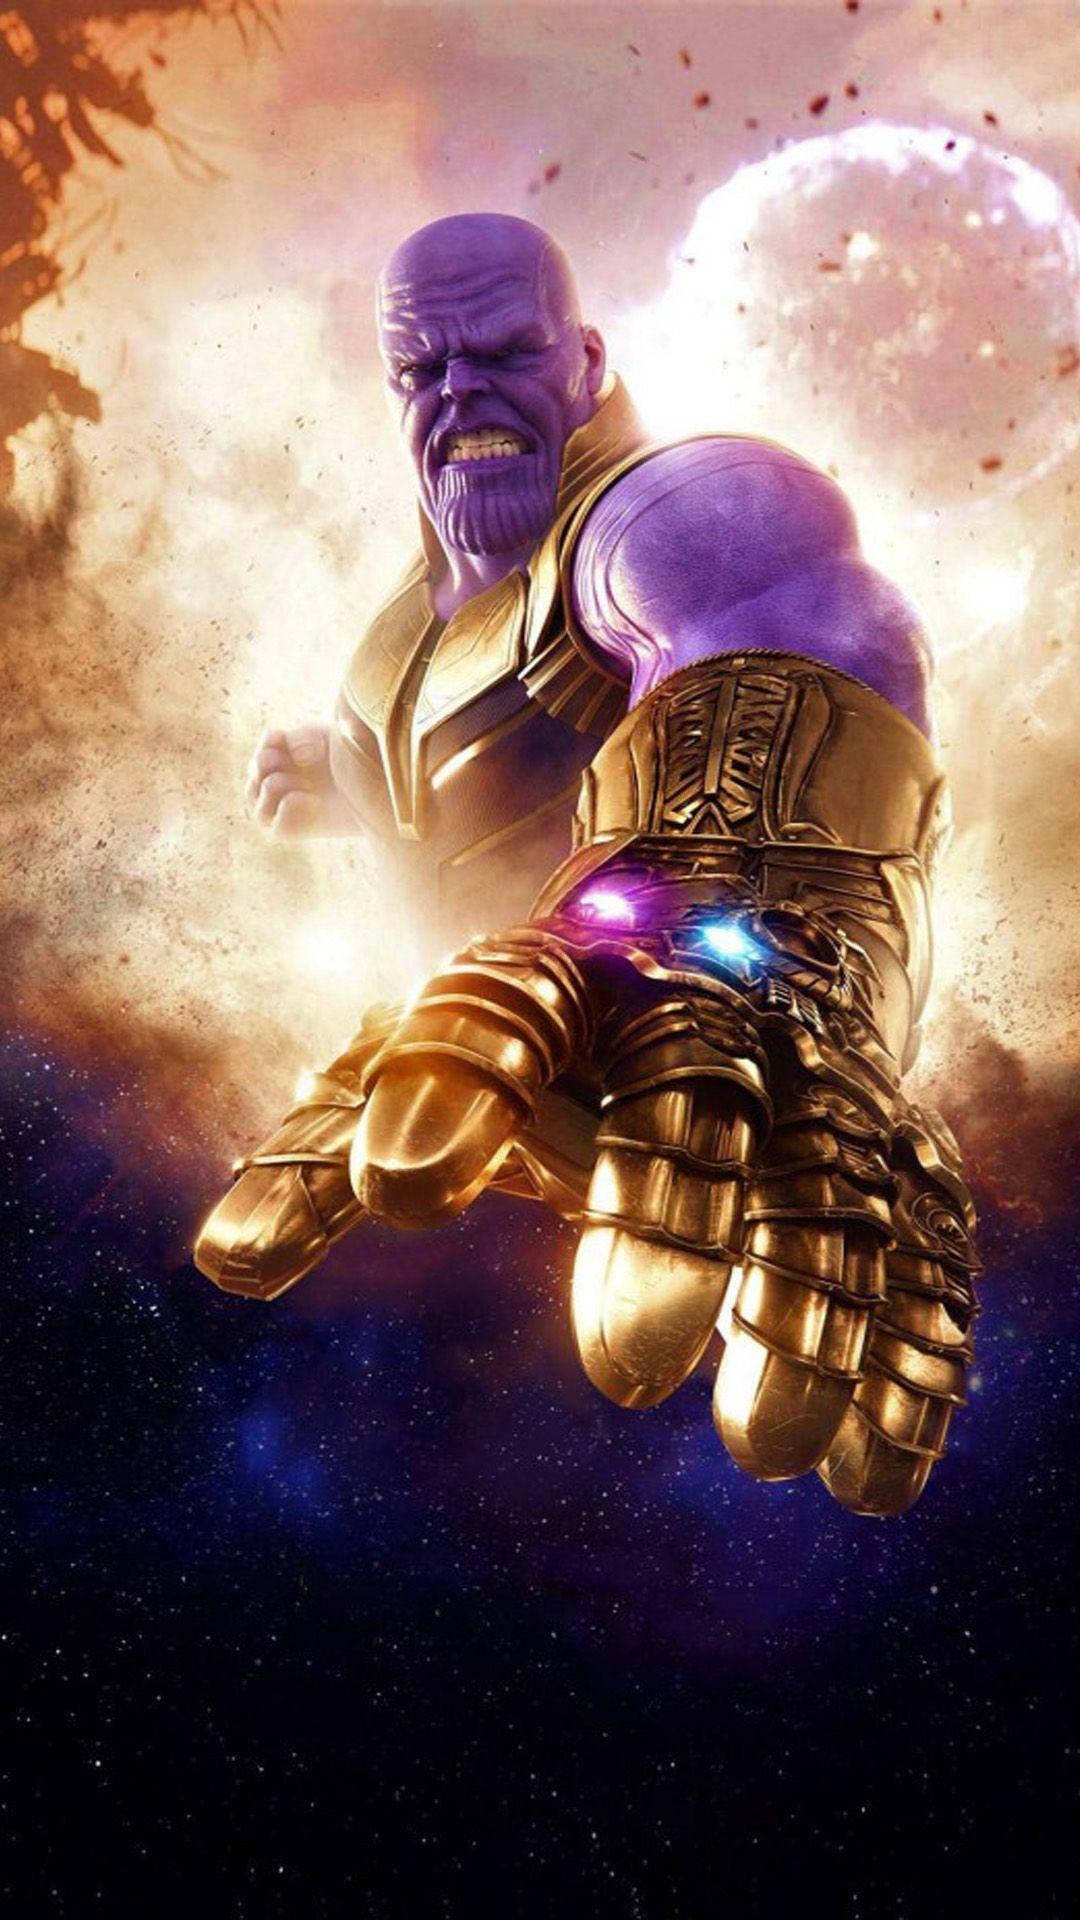 Thanos Avengers Infinity War 2018. Avengers wallpaper, Thanos